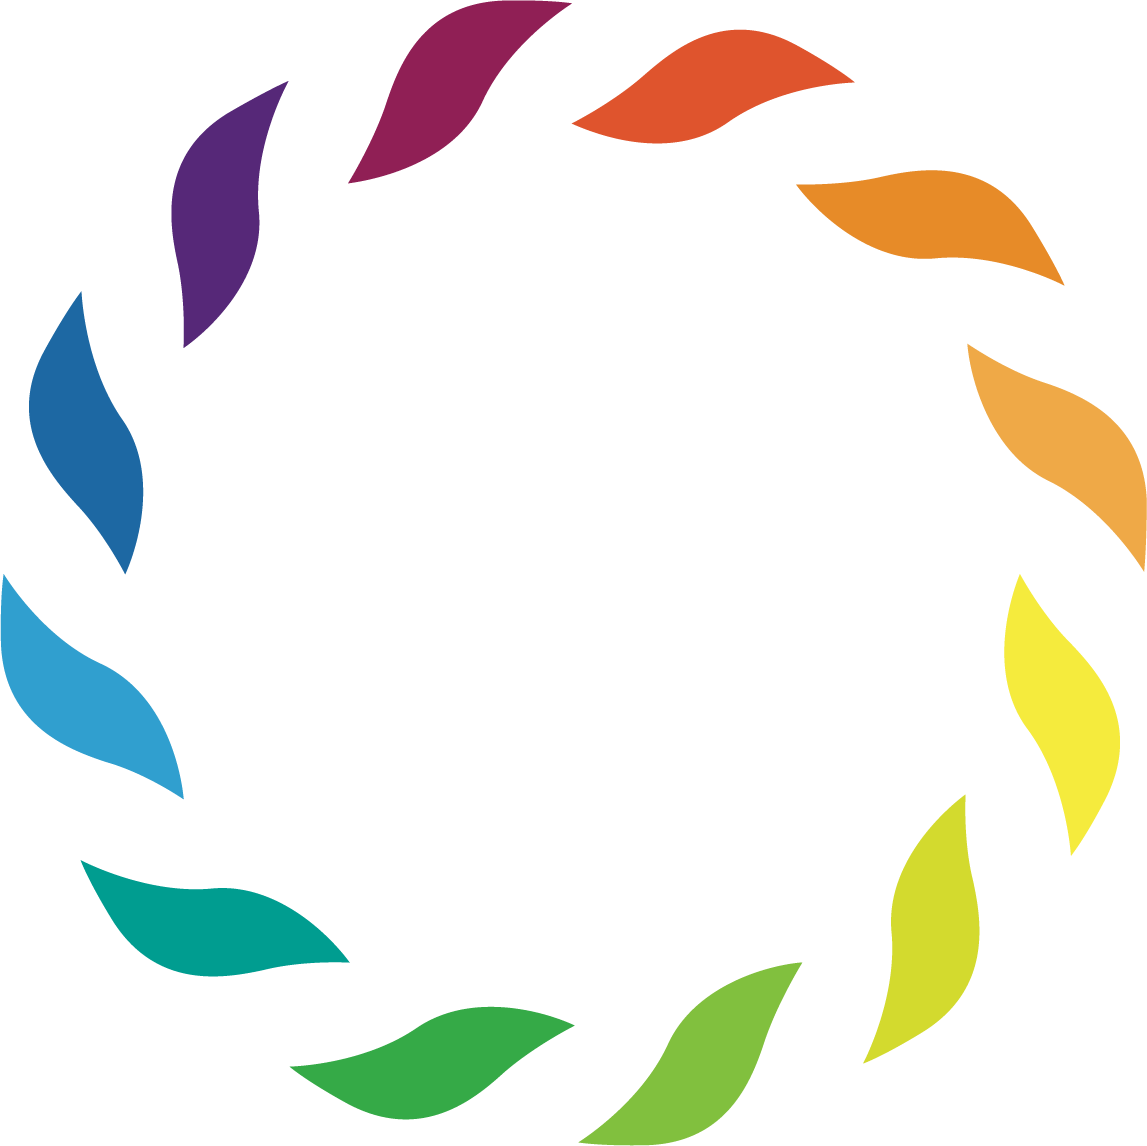 Contact Moda Management